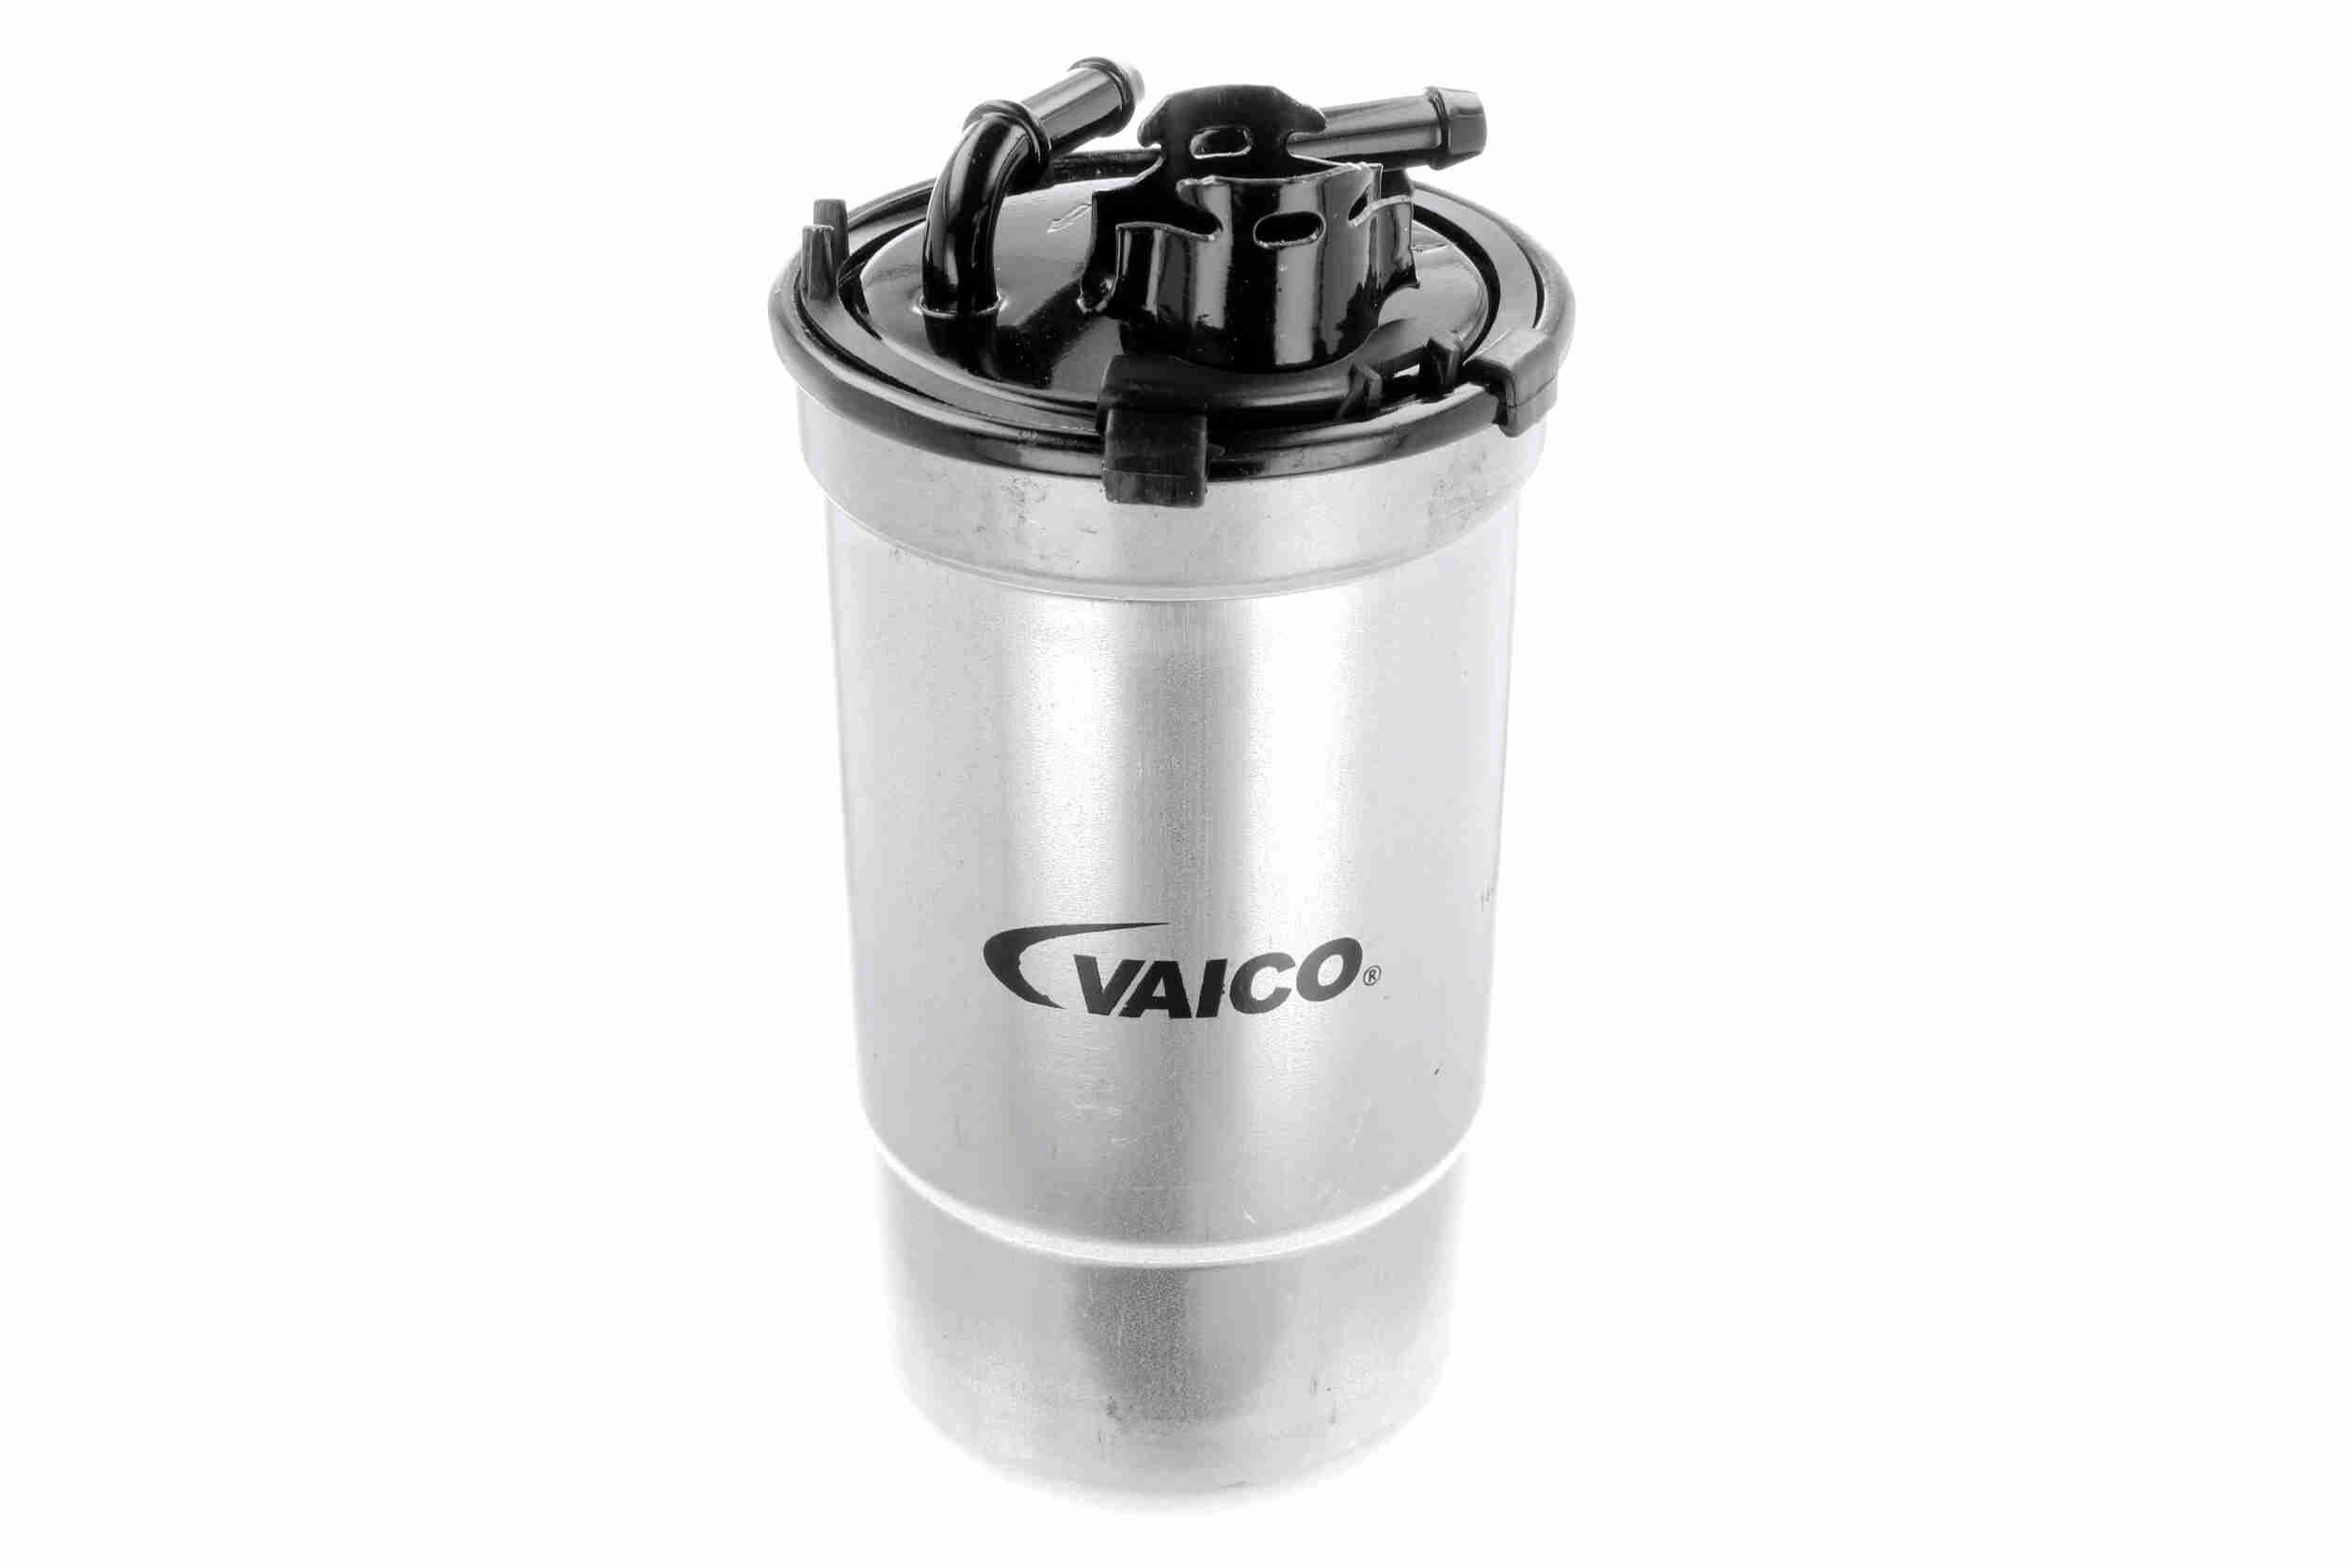 VAICO Palivový filtr Daihatsu V10-8166 v originální kvalitě